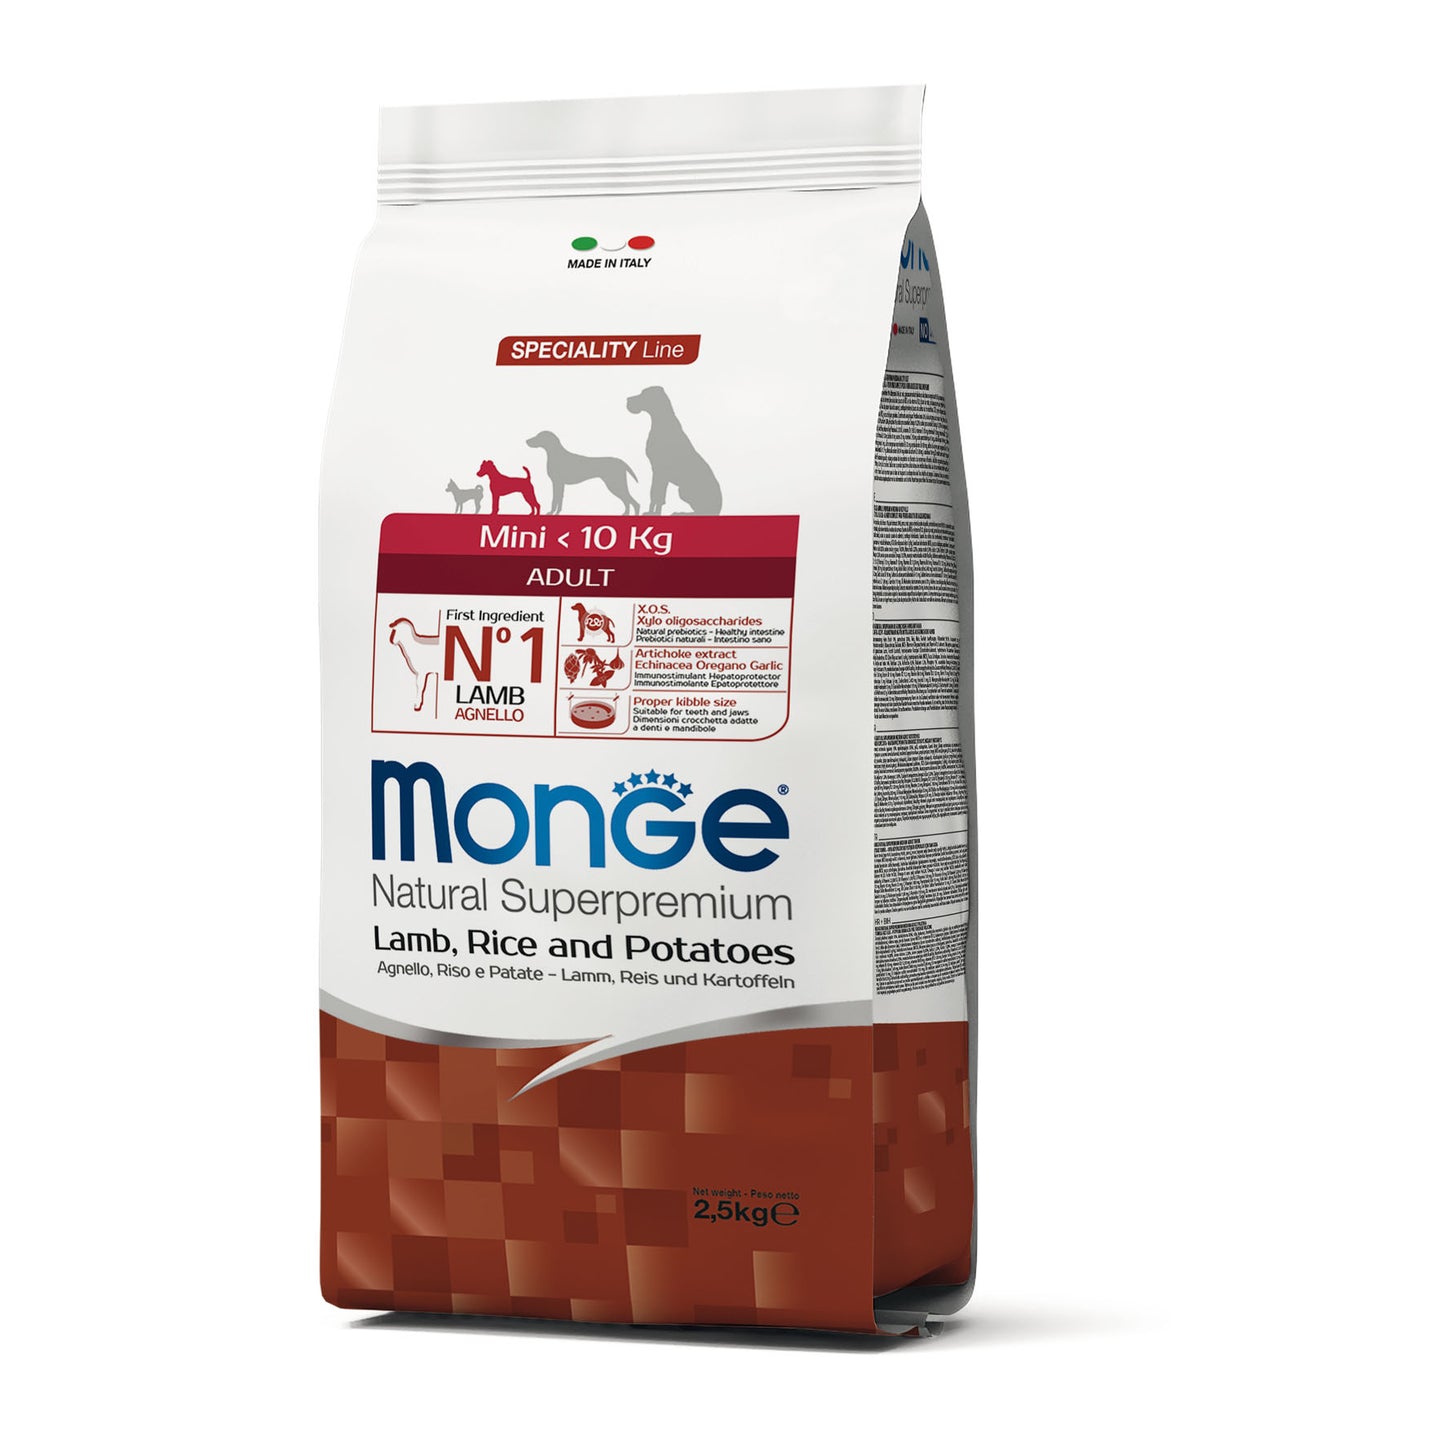 Monge Dog - SPECIALITY Line - Monoprotein - Adult Mini Lamb